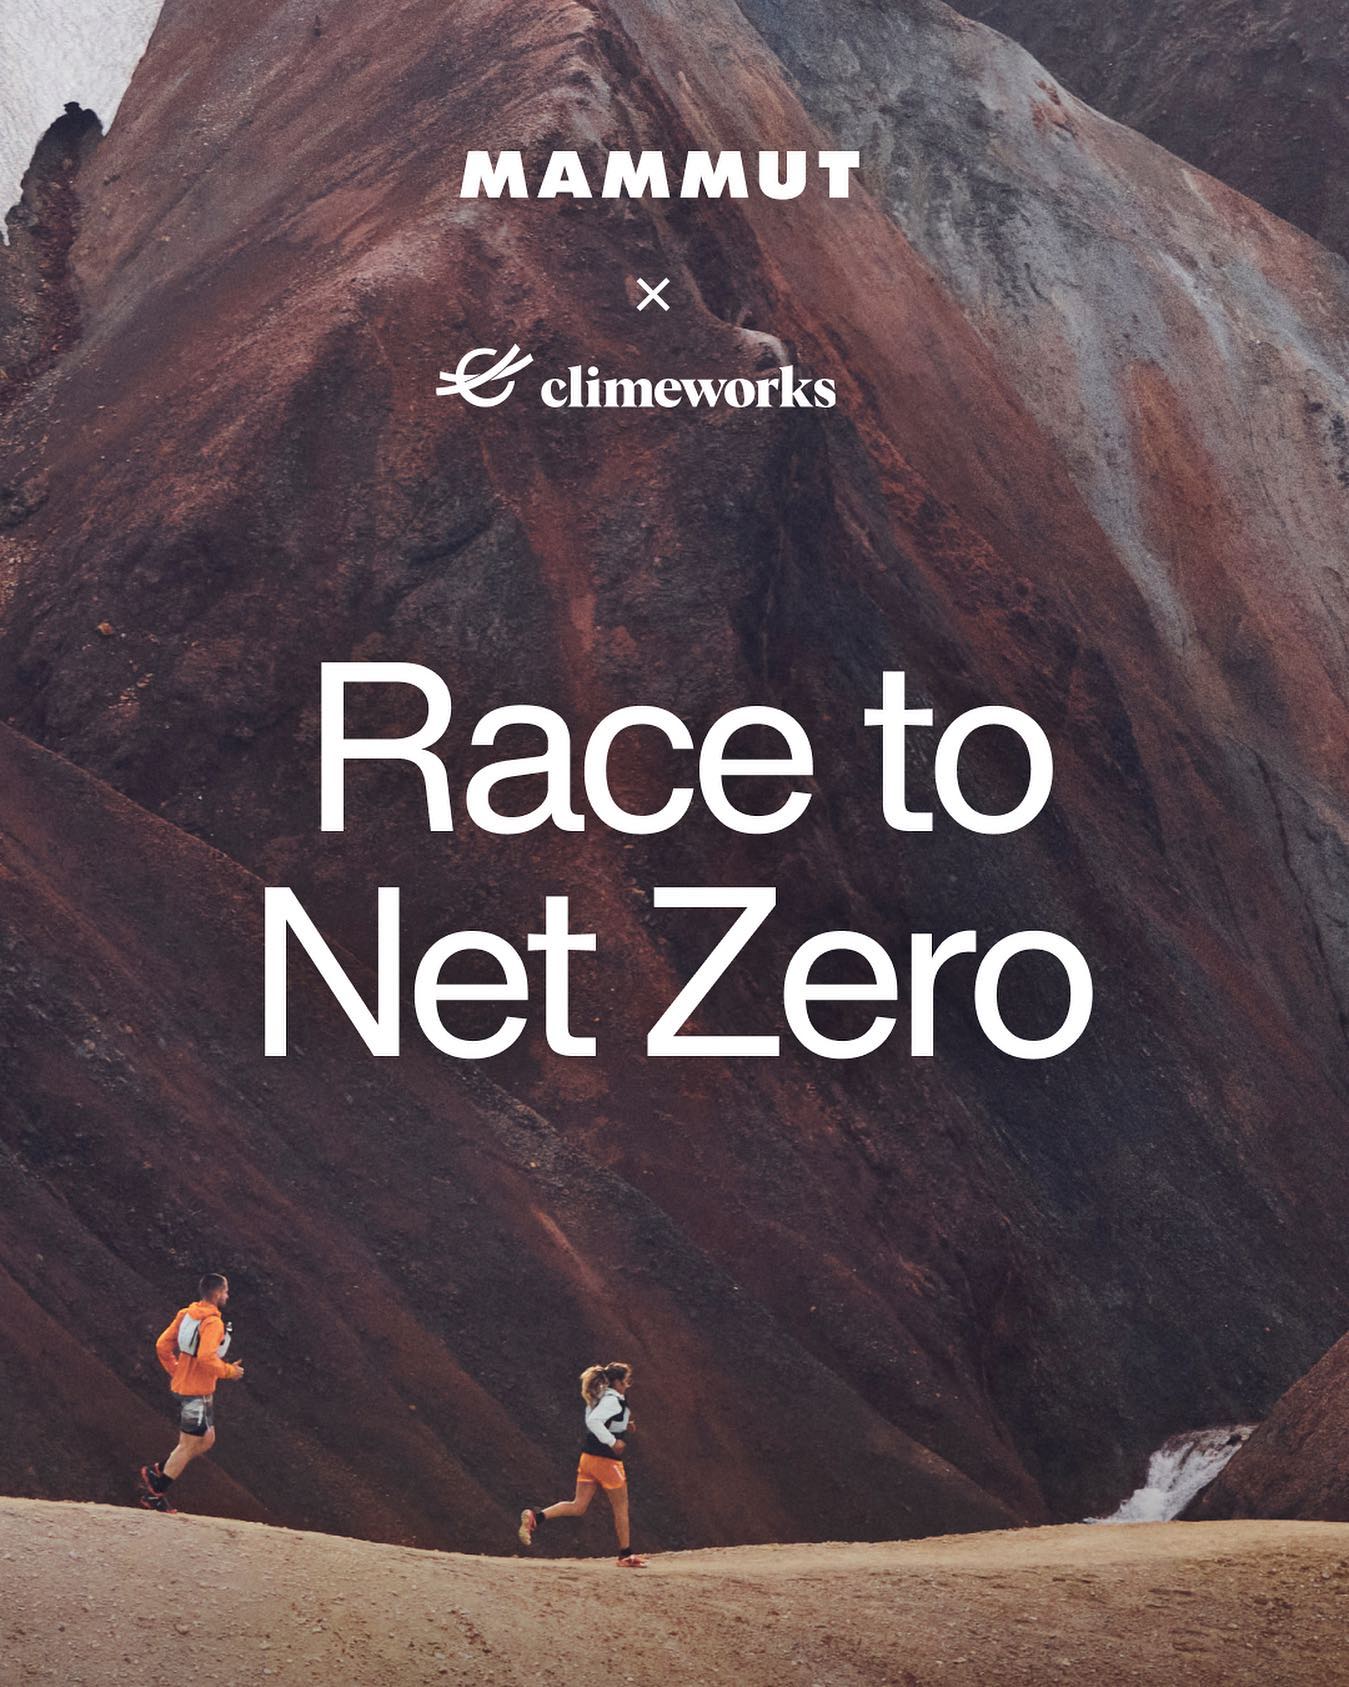 Mammut Race to Net Zero